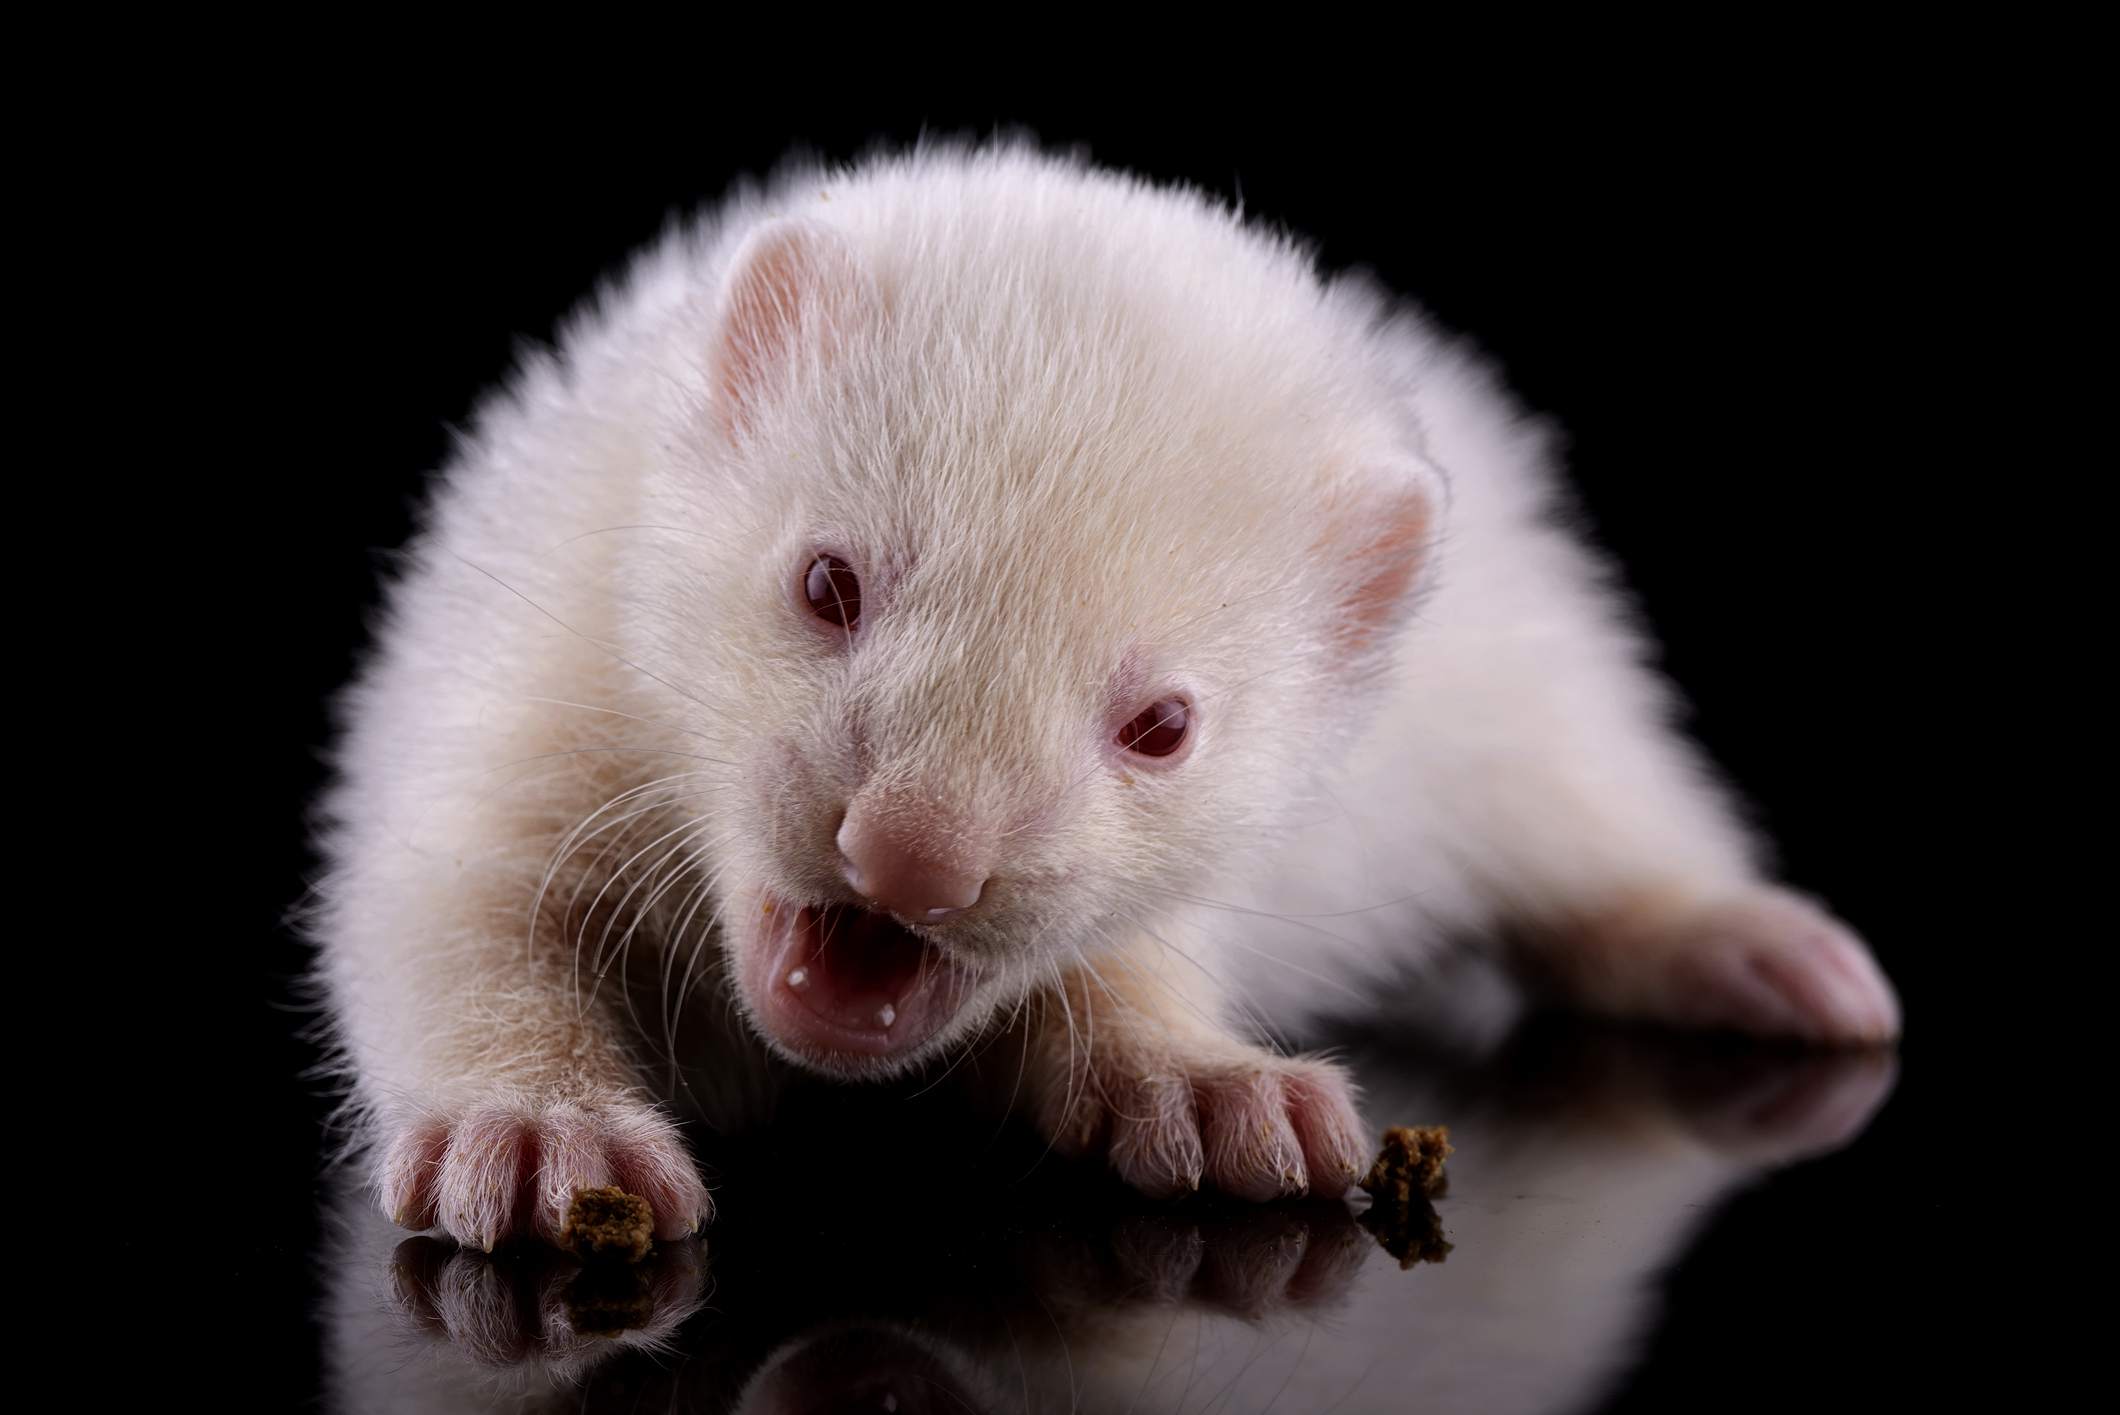 Baby albino ferret eating kibble